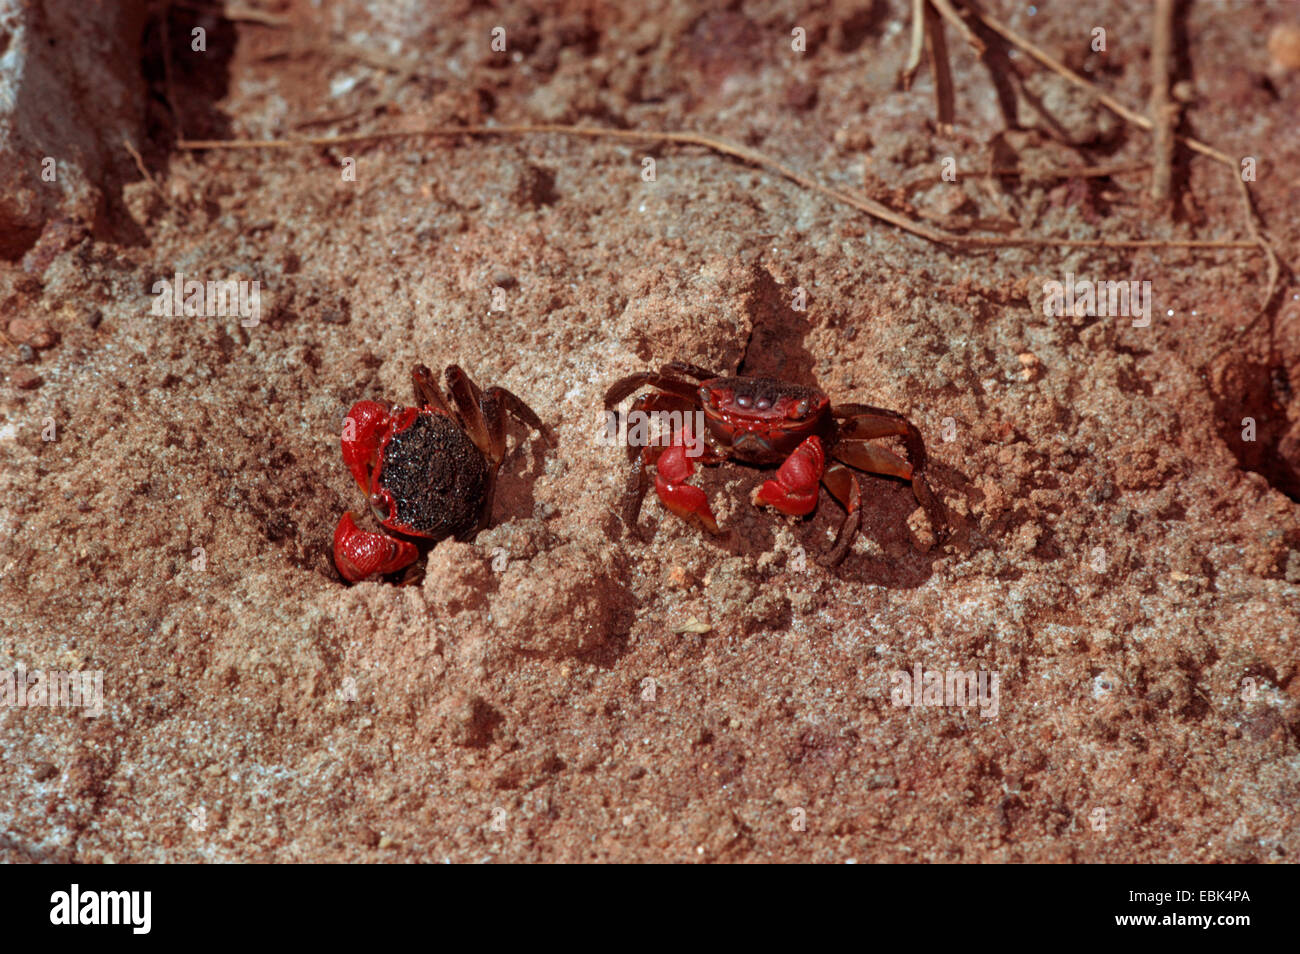 Mangrove Crab (Sesarma meinertii), two crabs on sandy slope, Madagascar, Majunga Stock Photo